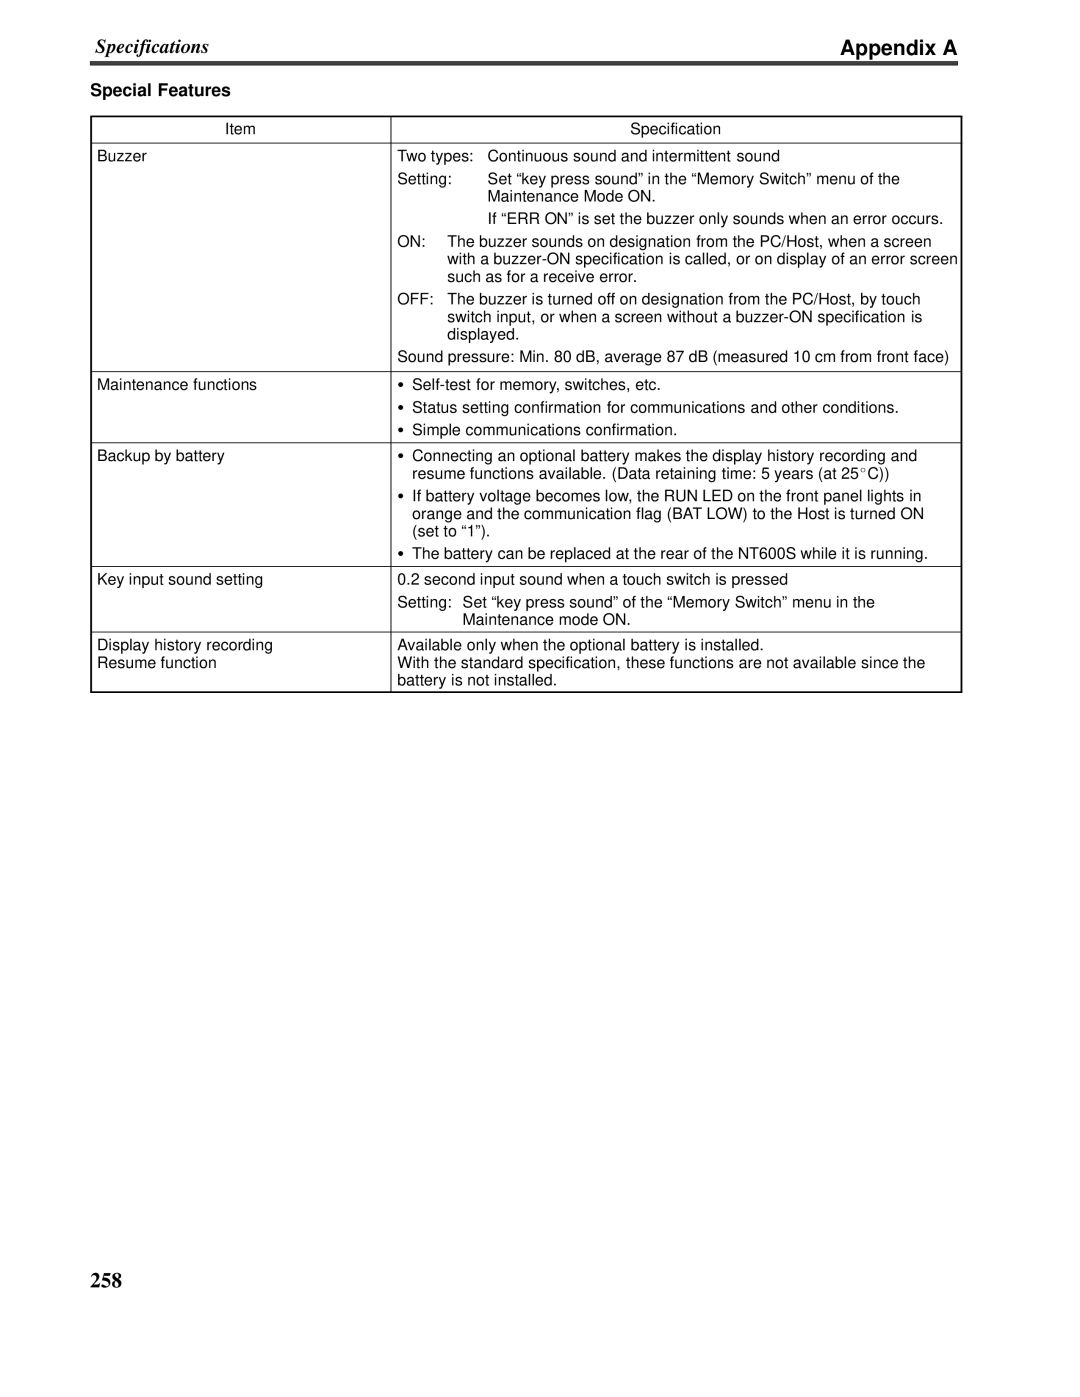 Omron V022-E3-1 operation manual Appendix A, Special Features 